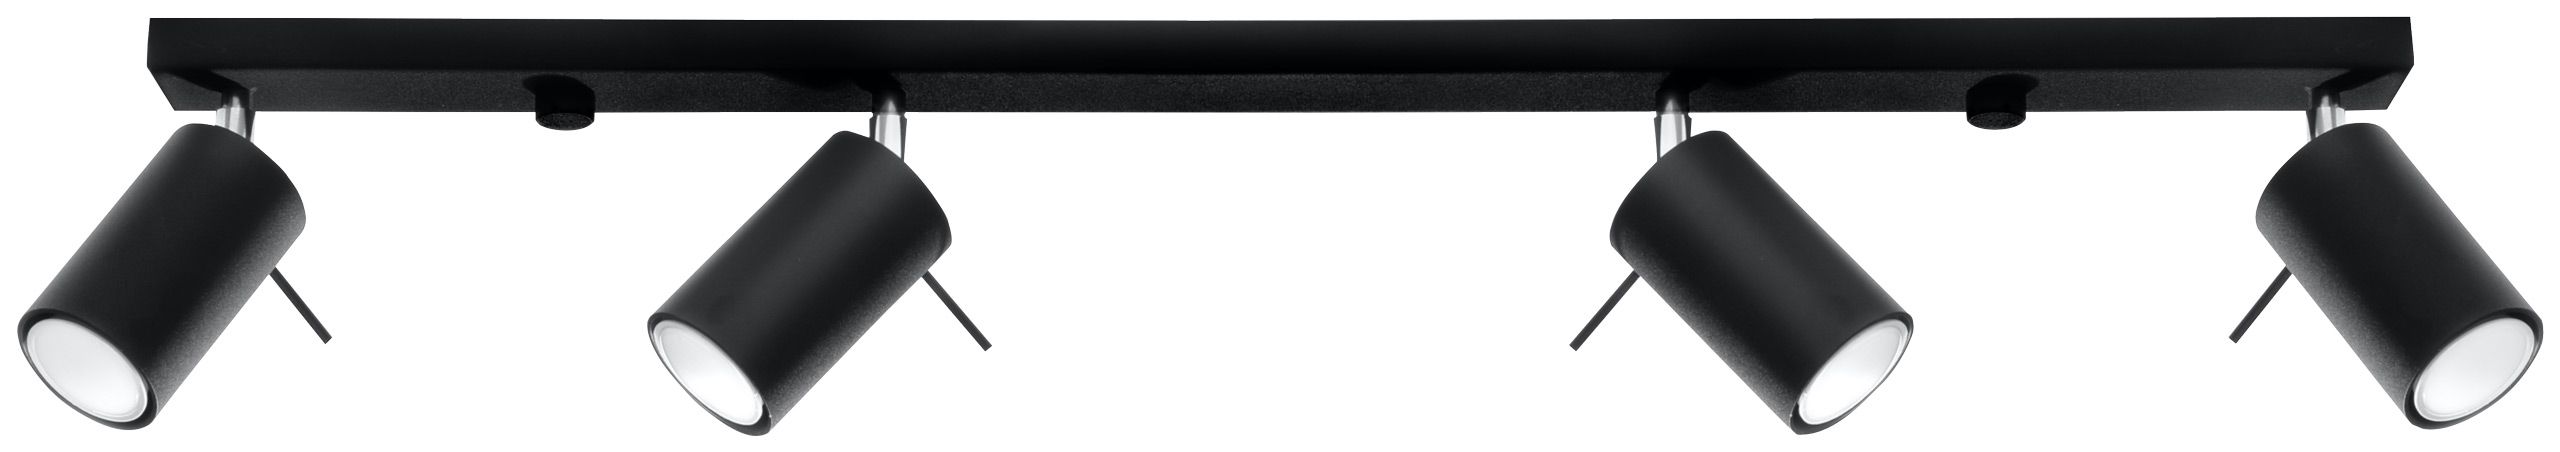 Deckenstrahler 4-flammig GU10 80 cm lang Schwarz Metall